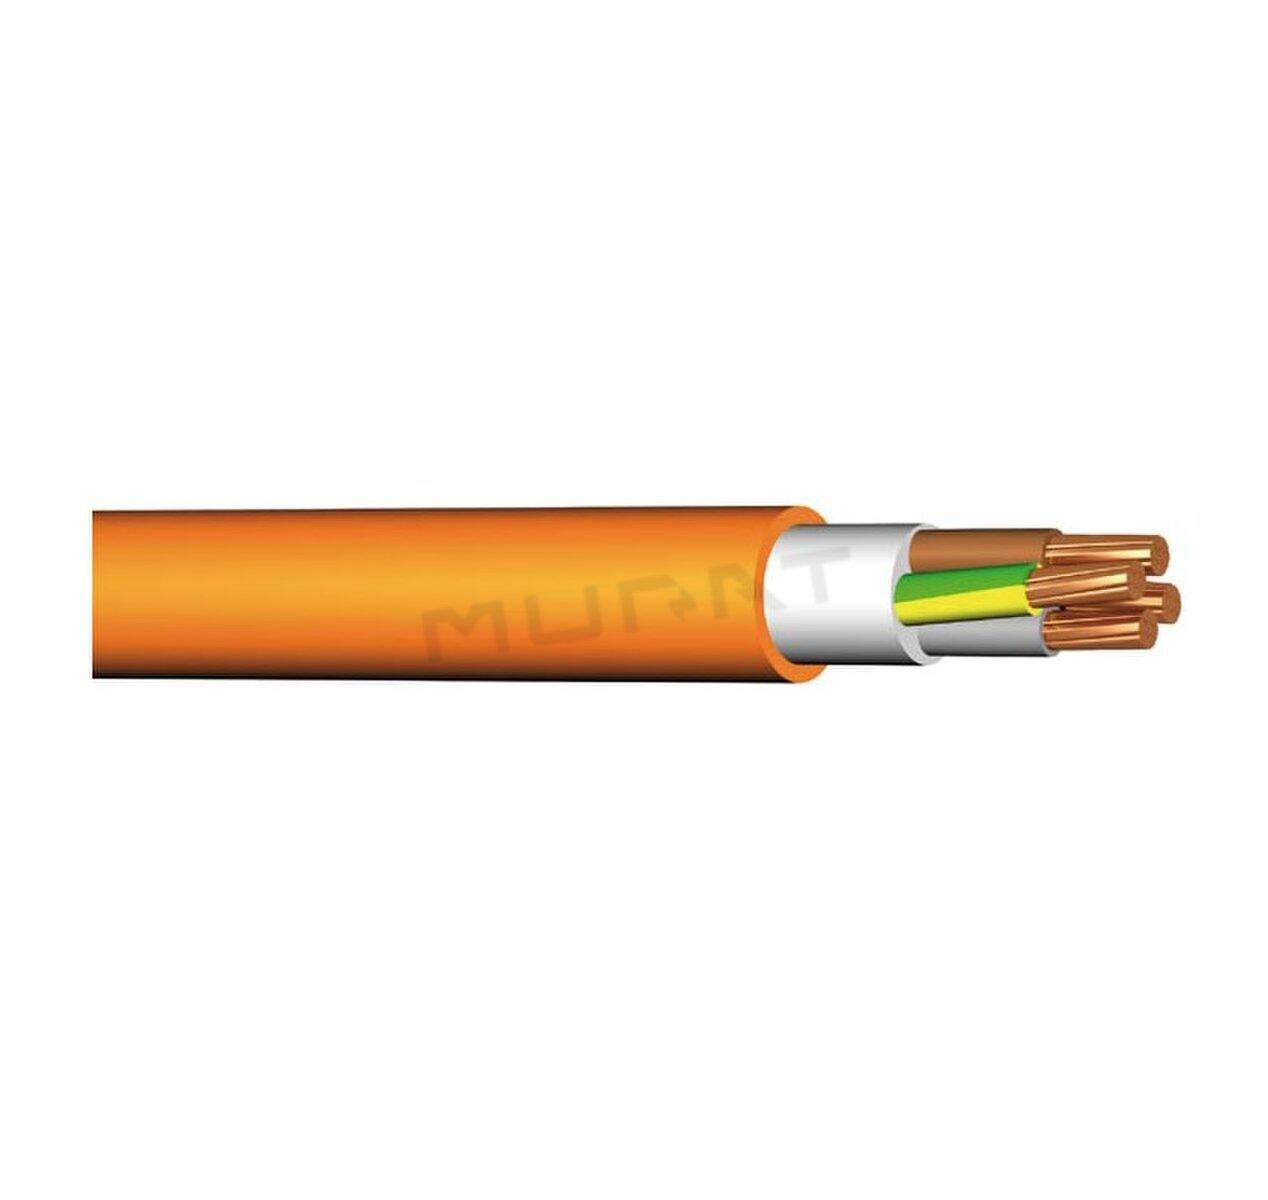 Kábel PRAFlaSafe X-J 5x2,5 mm2 RE B2ca s1d1a1